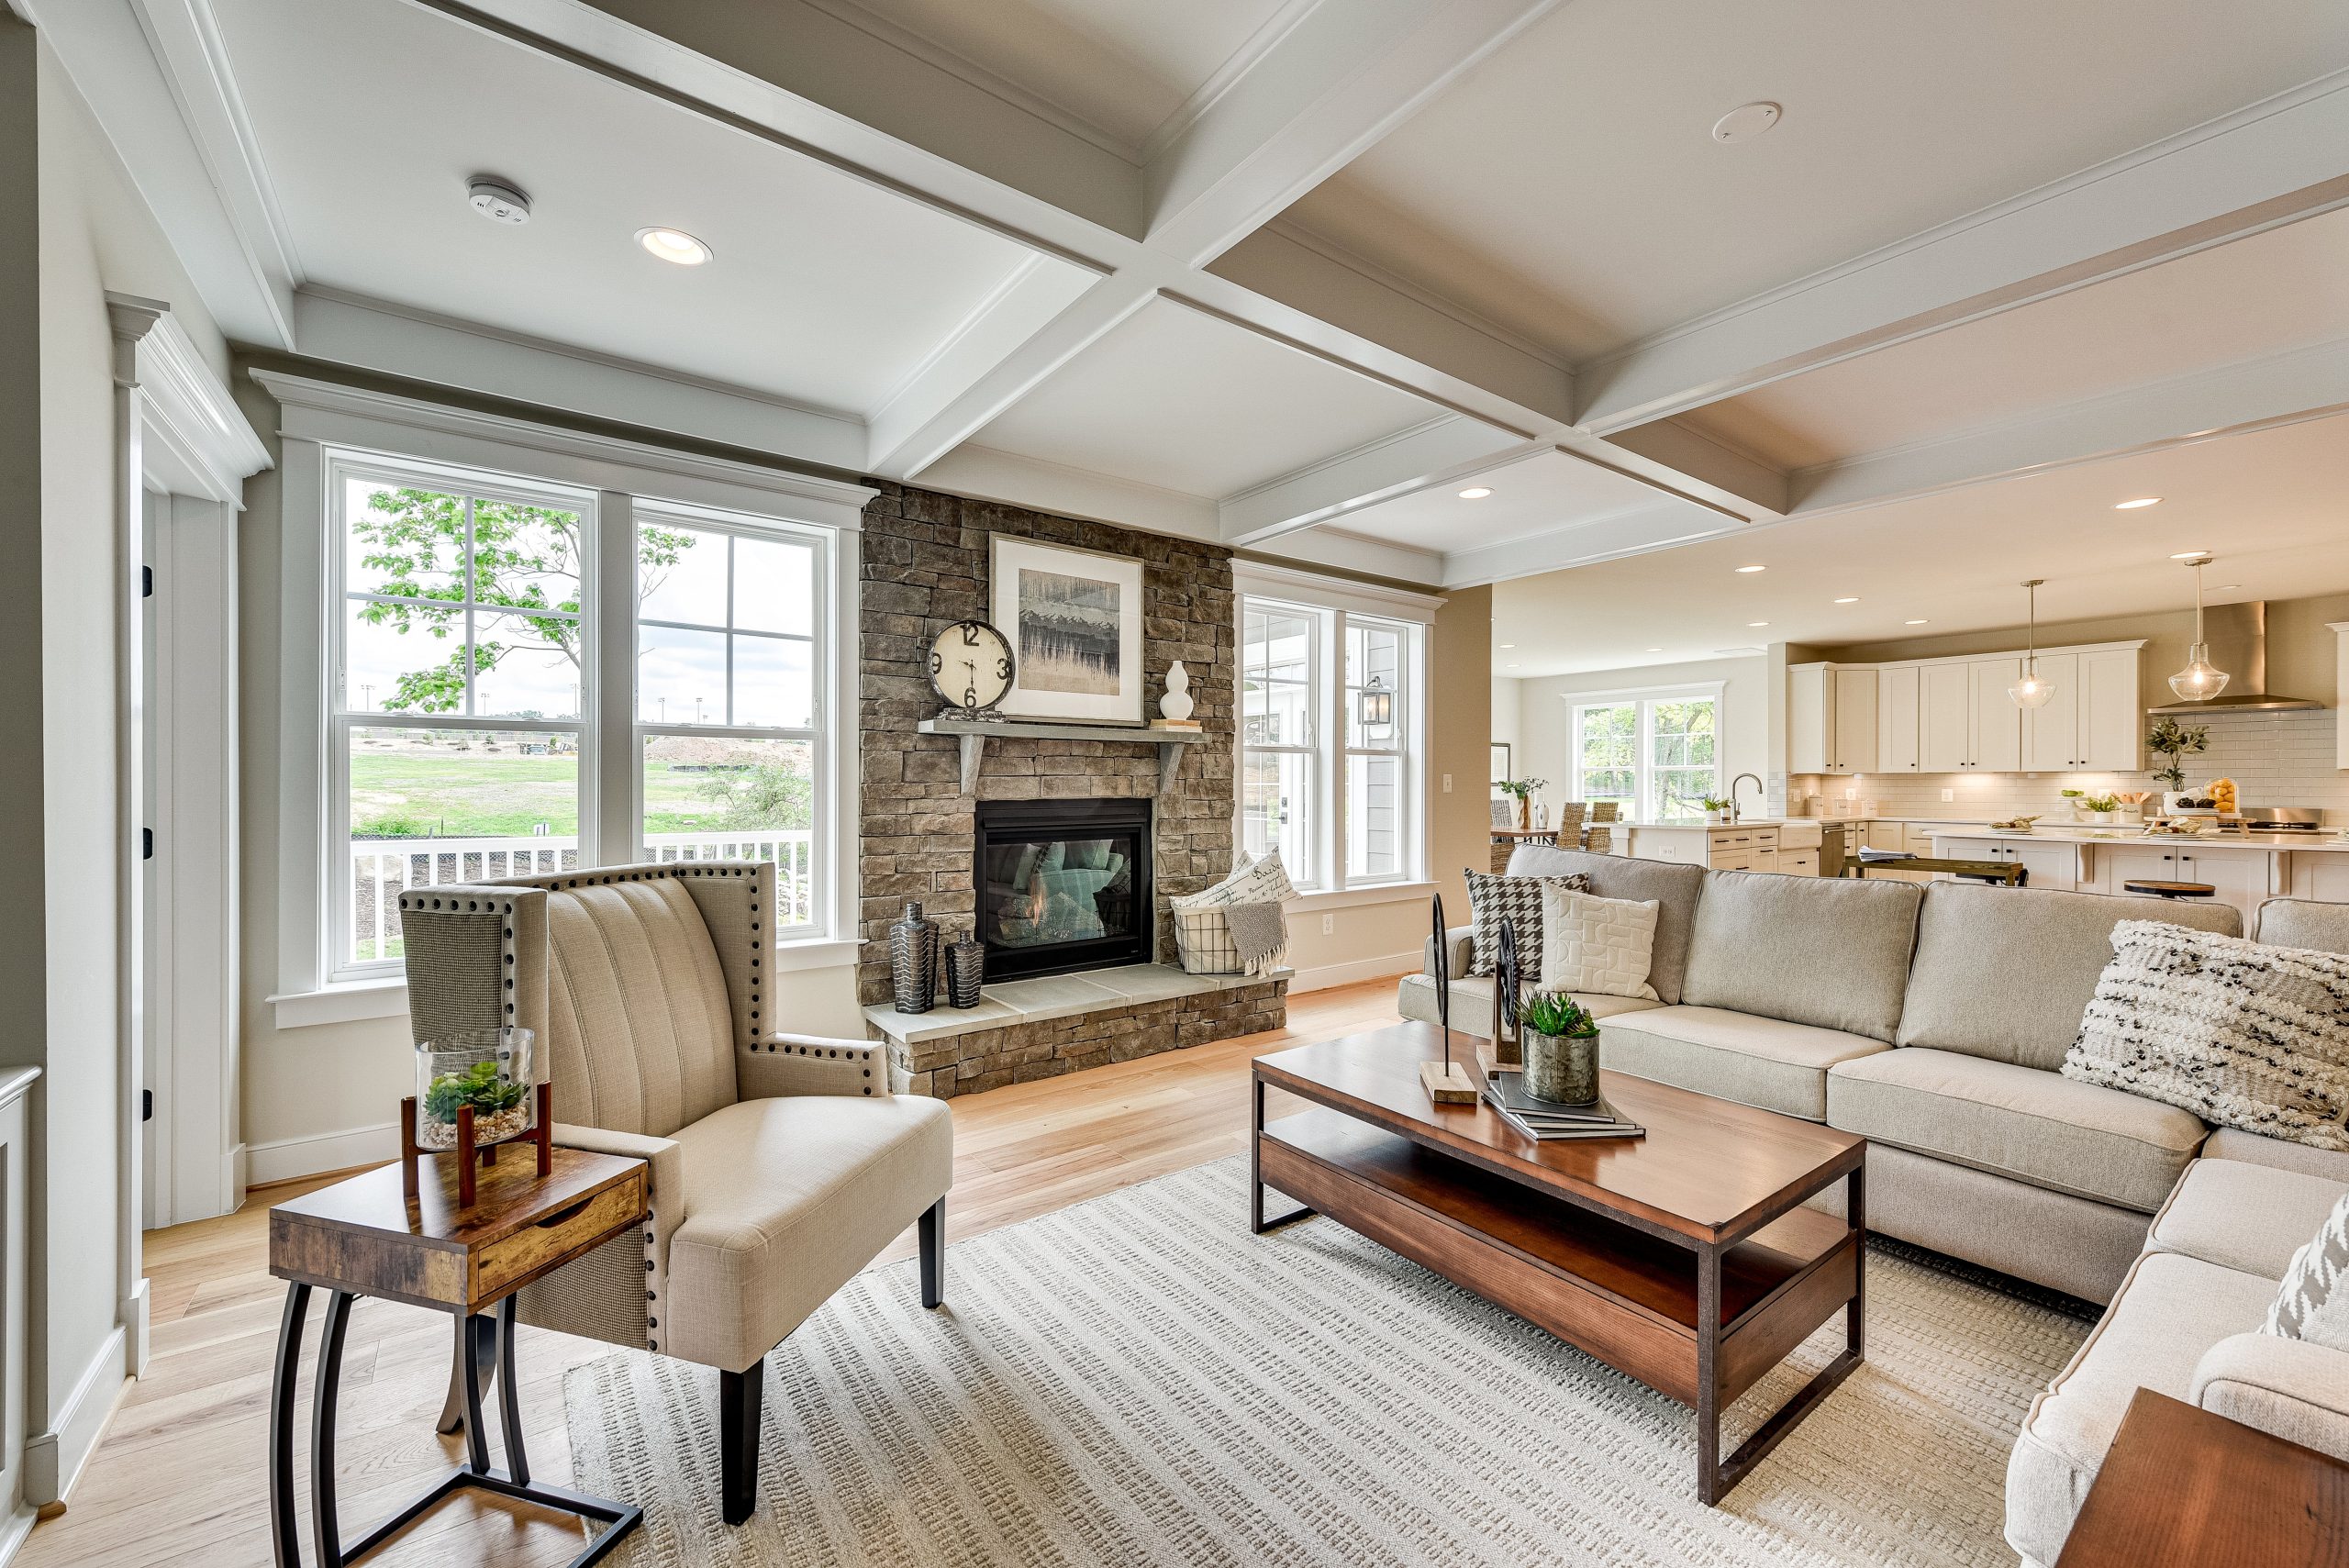 Chapman single family home floorplan living room in Virginia